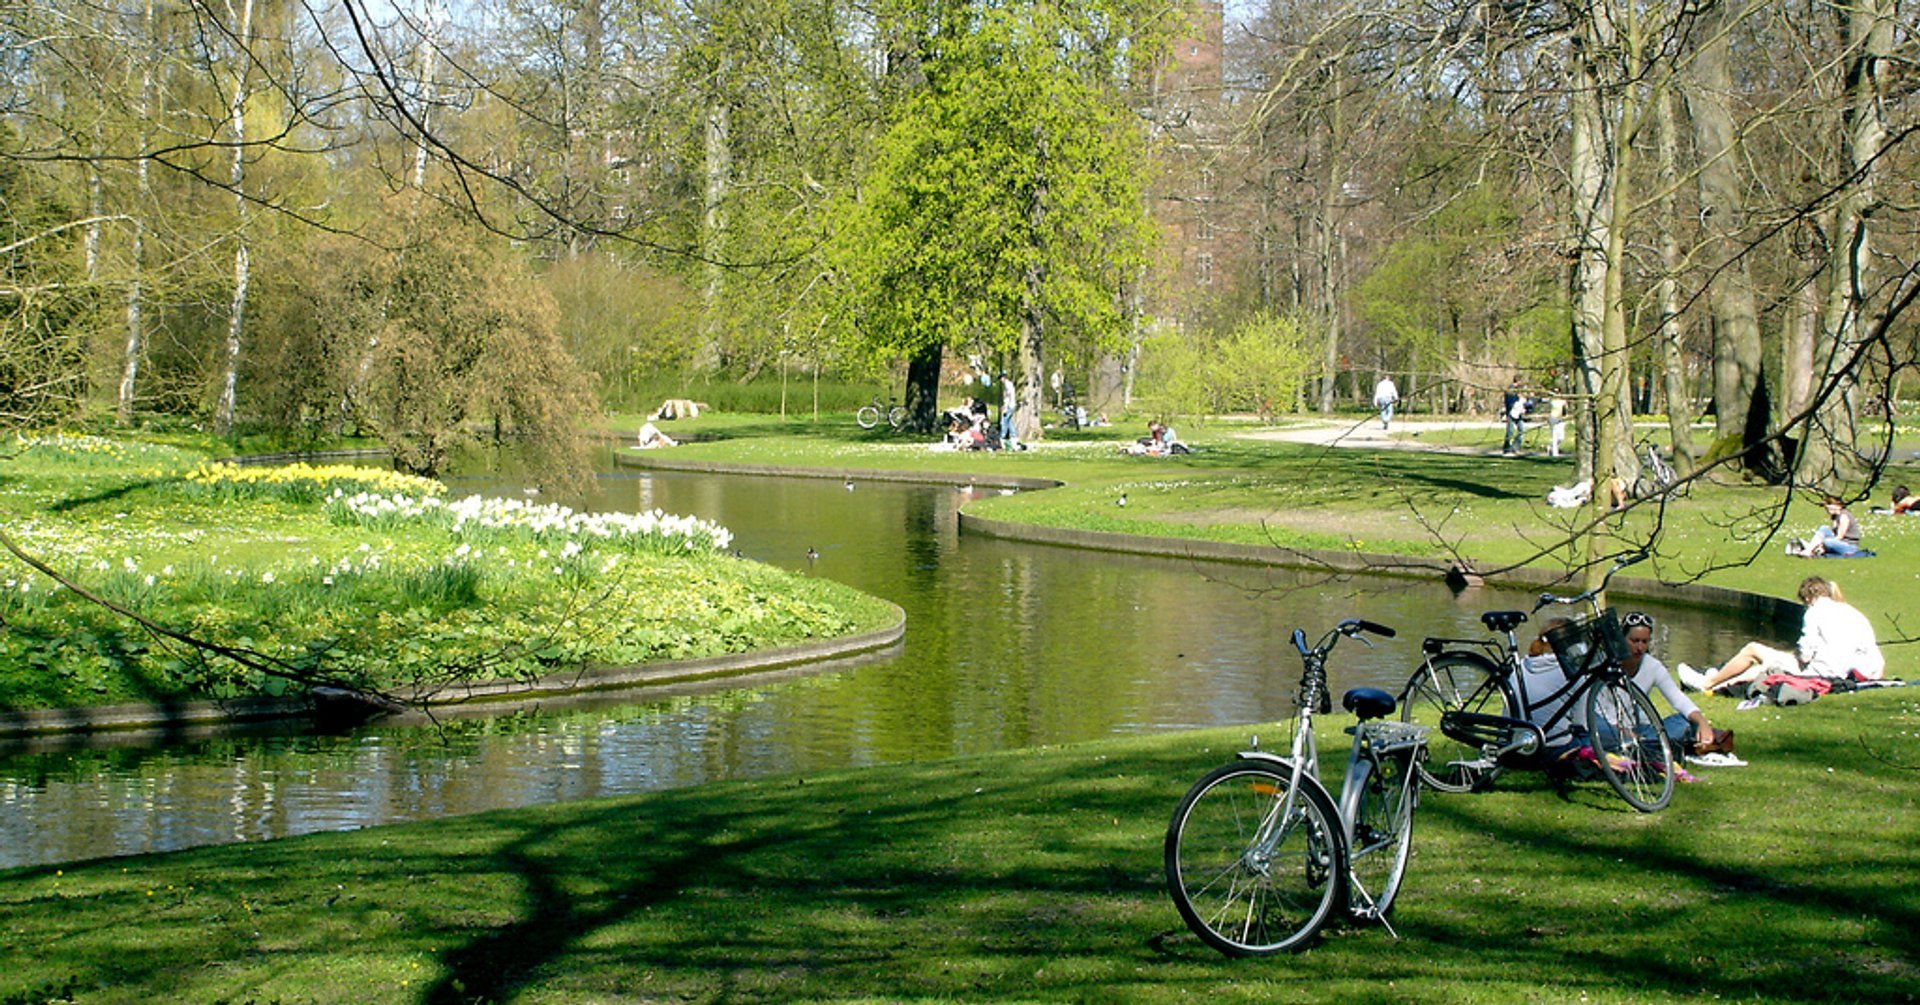 Copenhagen's Parks